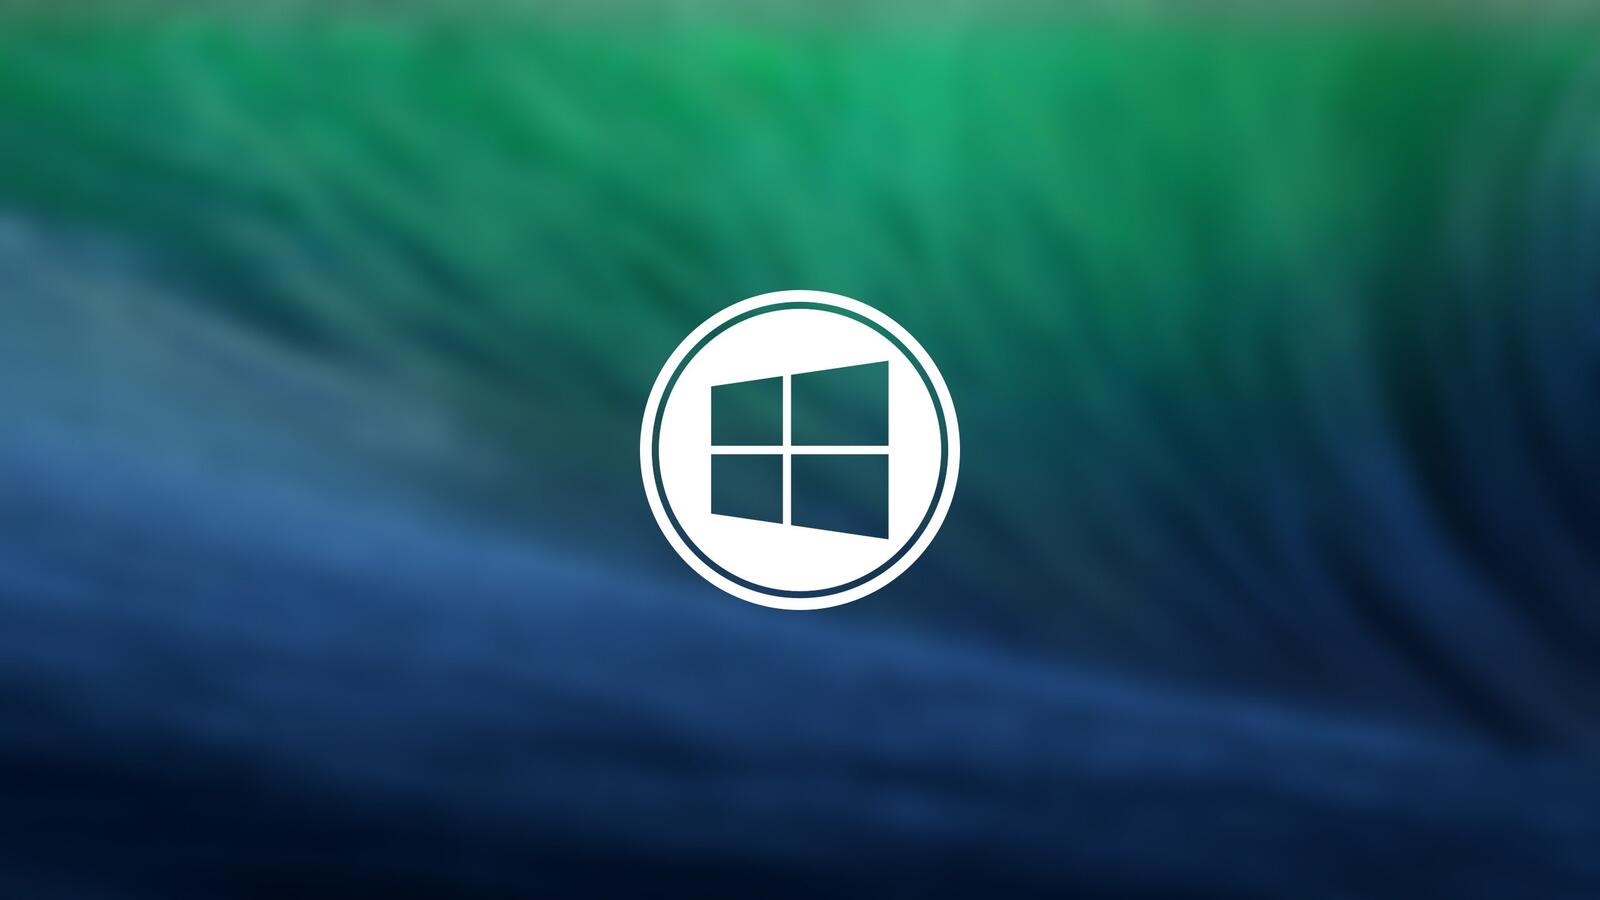 Wallpapers maverick screensaver Windows 7 on the desktop